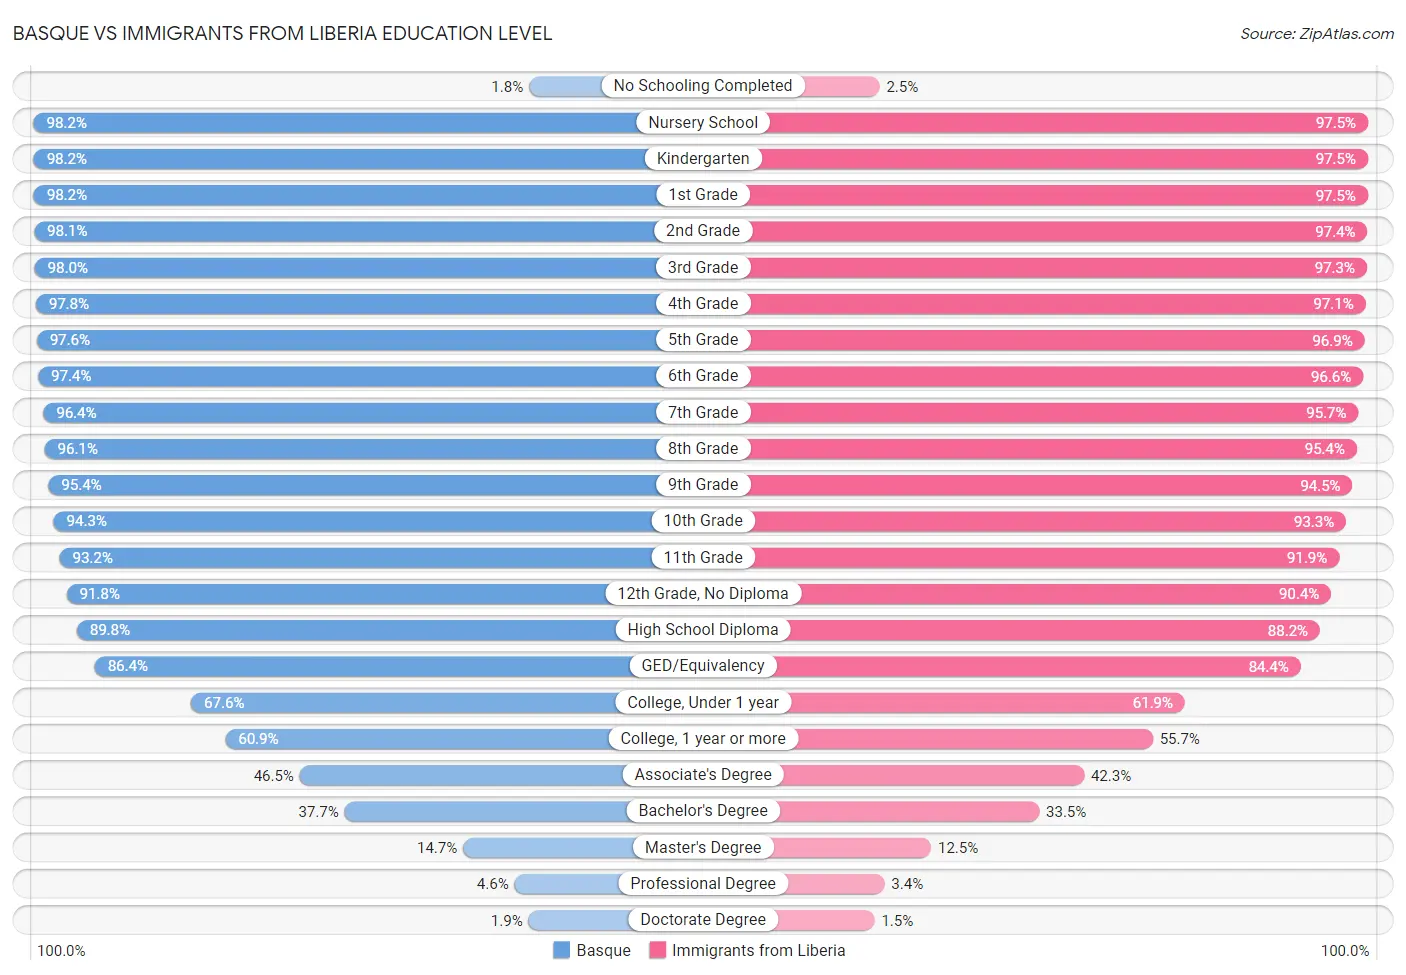 Basque vs Immigrants from Liberia Education Level